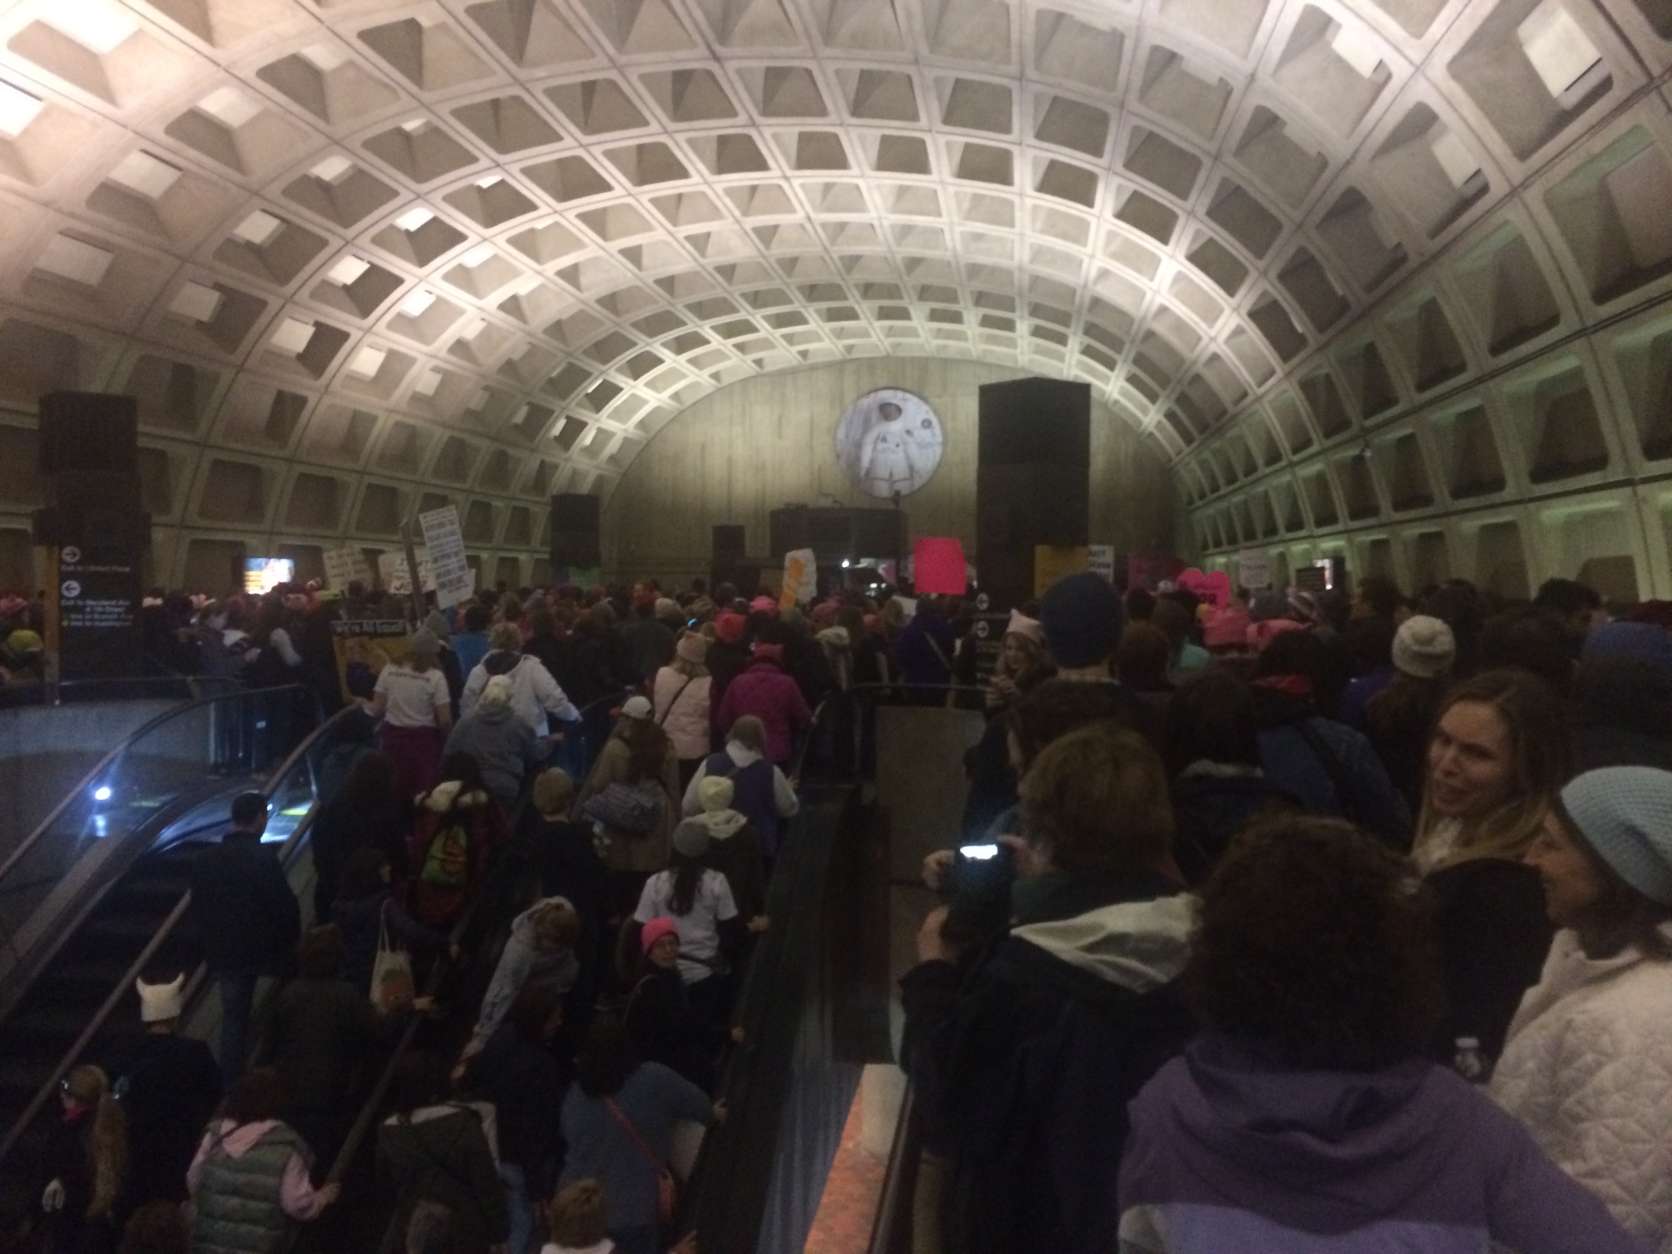 Crowds flood L'Enfant Plaza Metro station as people head toward the Women's March on Washington on Saturday, Jan. 21, 2017. (Courtesy Lauren Dunne)